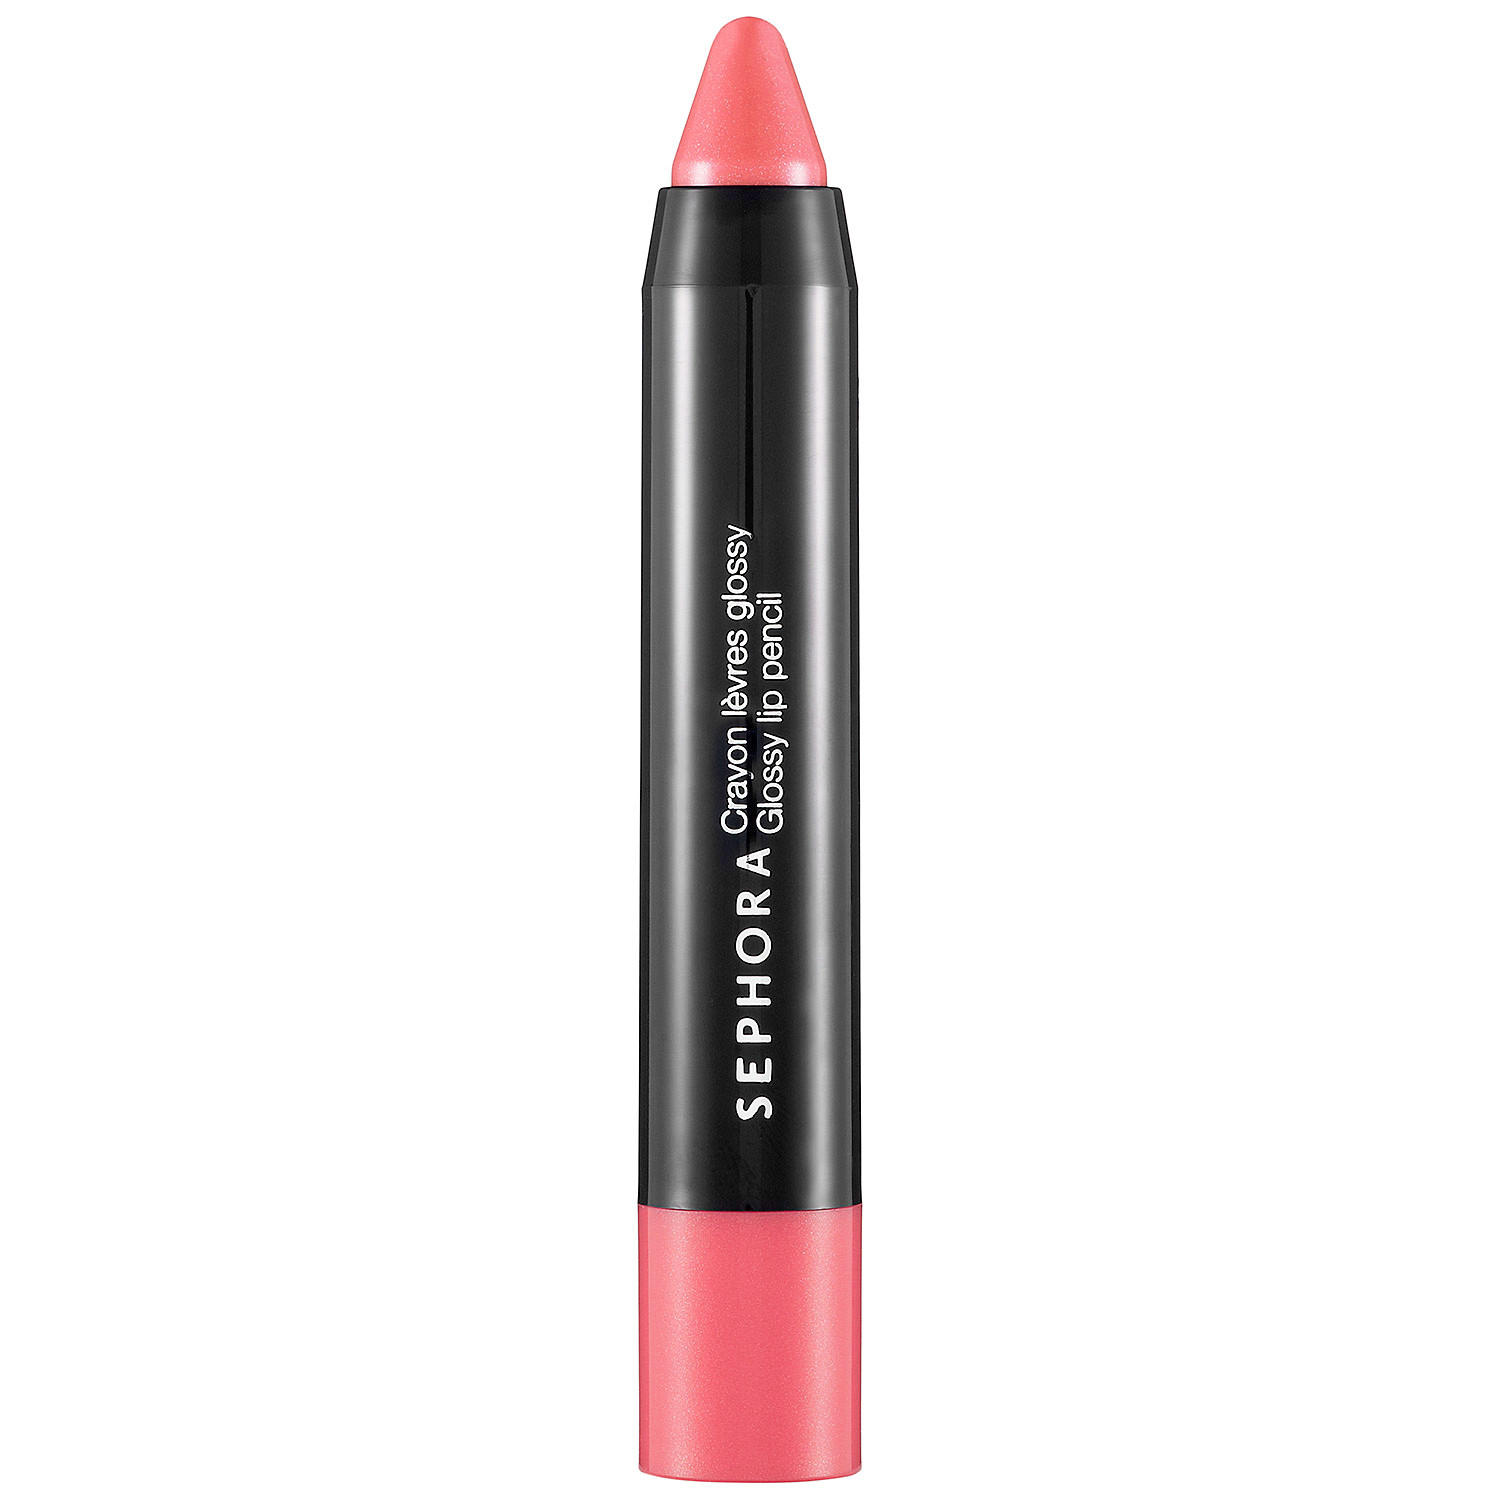 Sephora Glossy Lip Pencil Glossy Pink 01